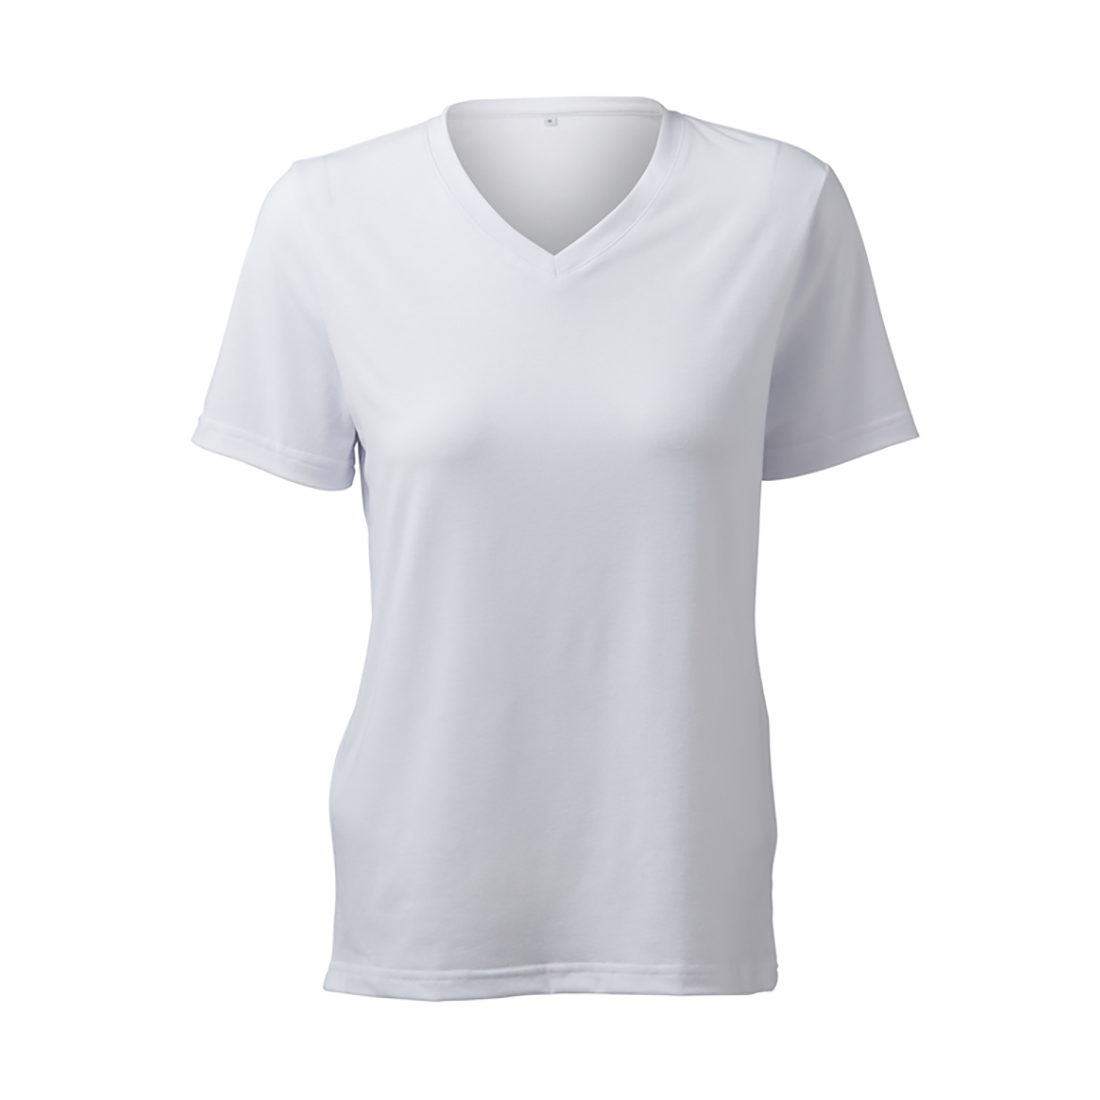 Cricut Women's T -Shirt Blank, V -Neck